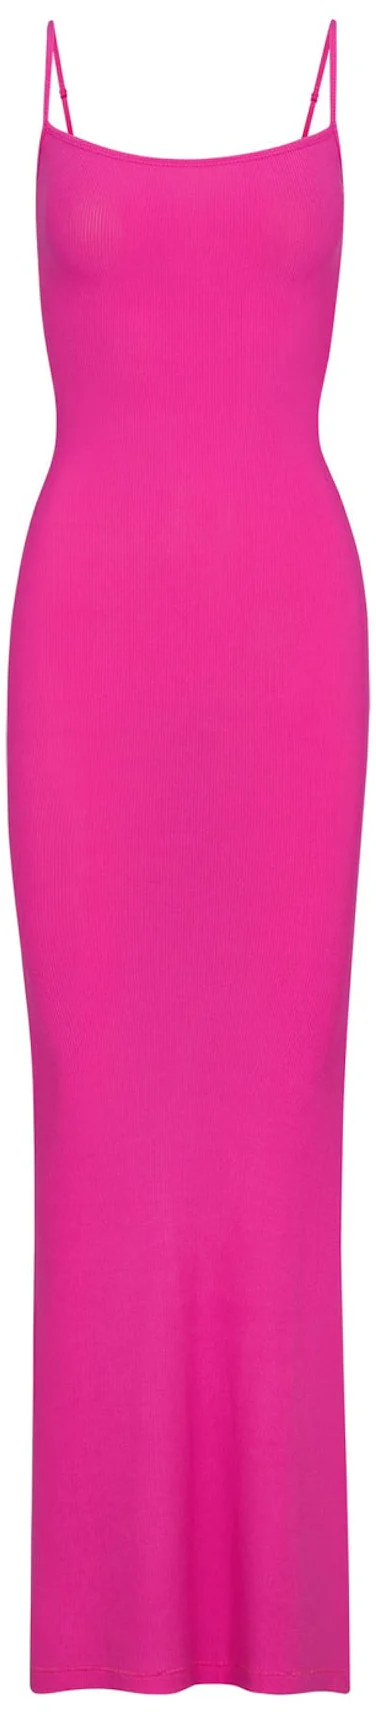 SKIMS Soft Lounge Long Slip Dress Hot Pink - GB